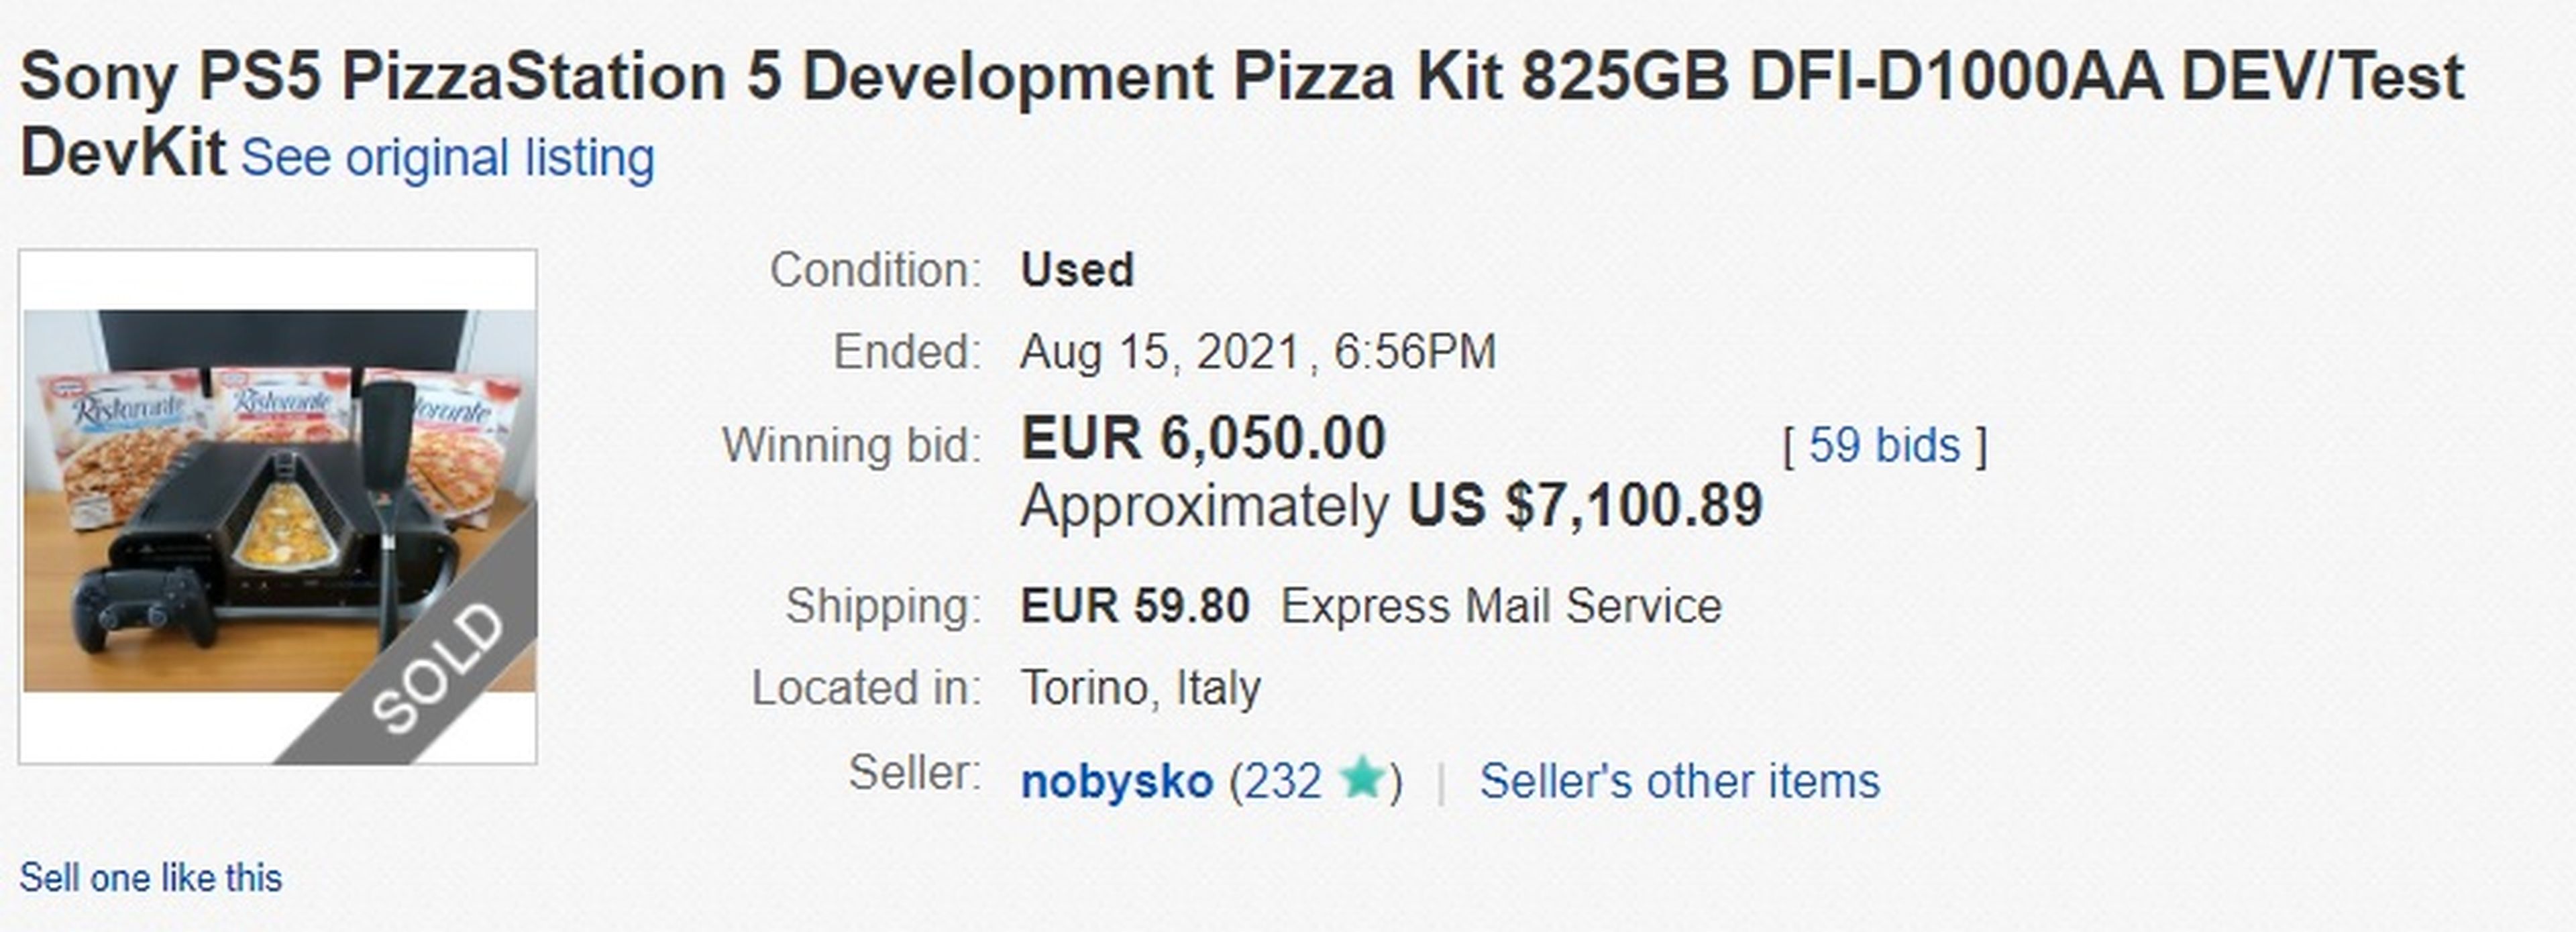 PS5 Devkit pizza